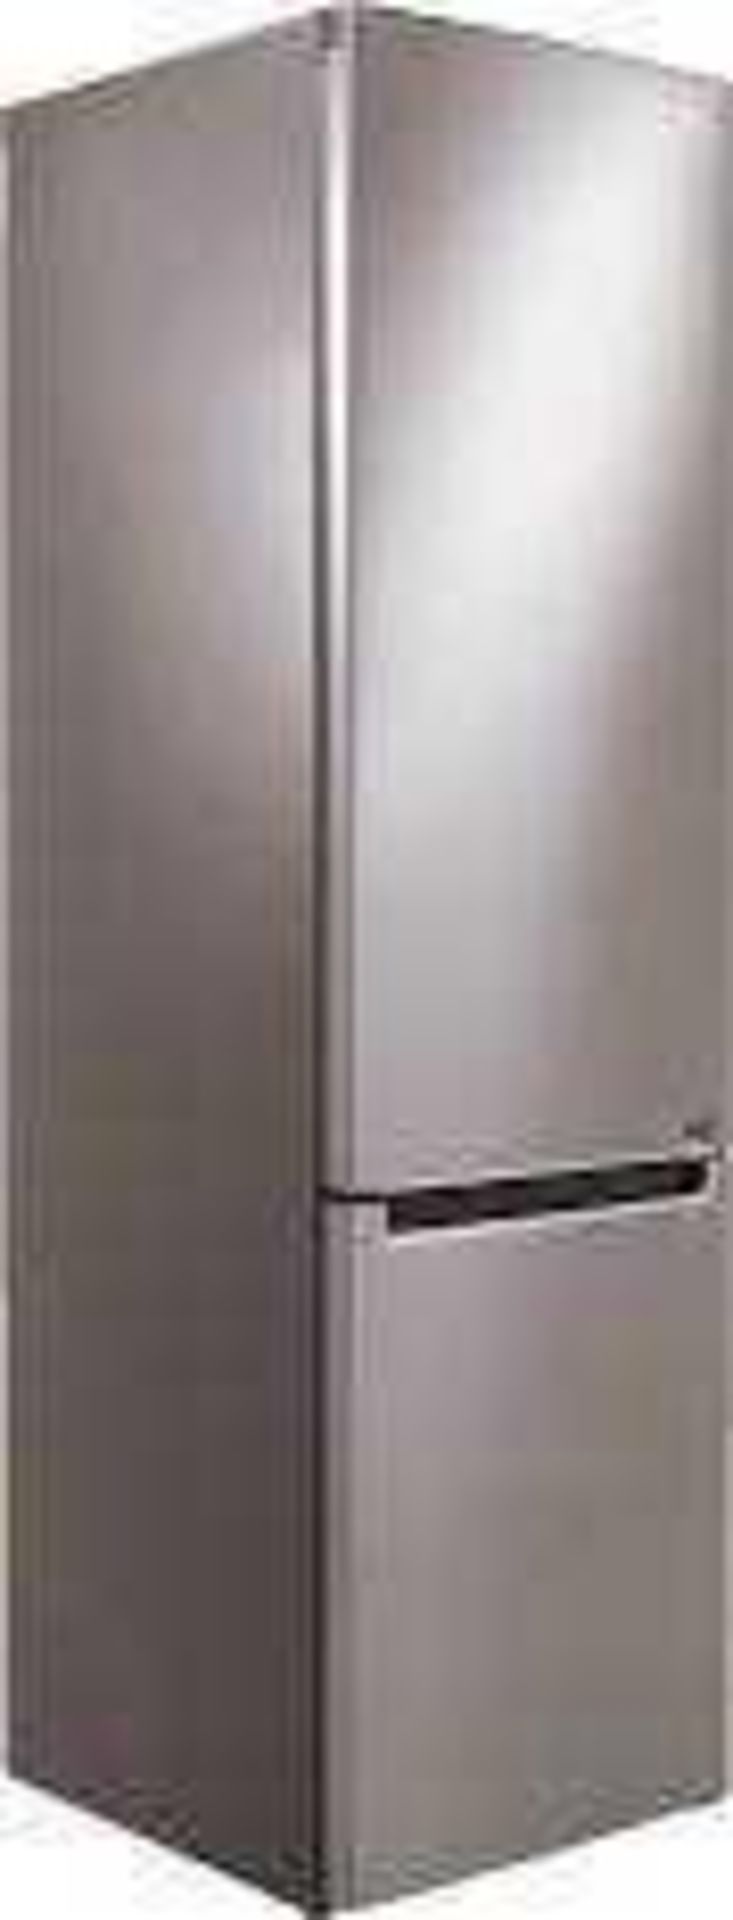 RRP £800 Boxed Lgbb72Pzefn Platinum Silver Free Standing Fridge Freezer 2984118 (Appraisals